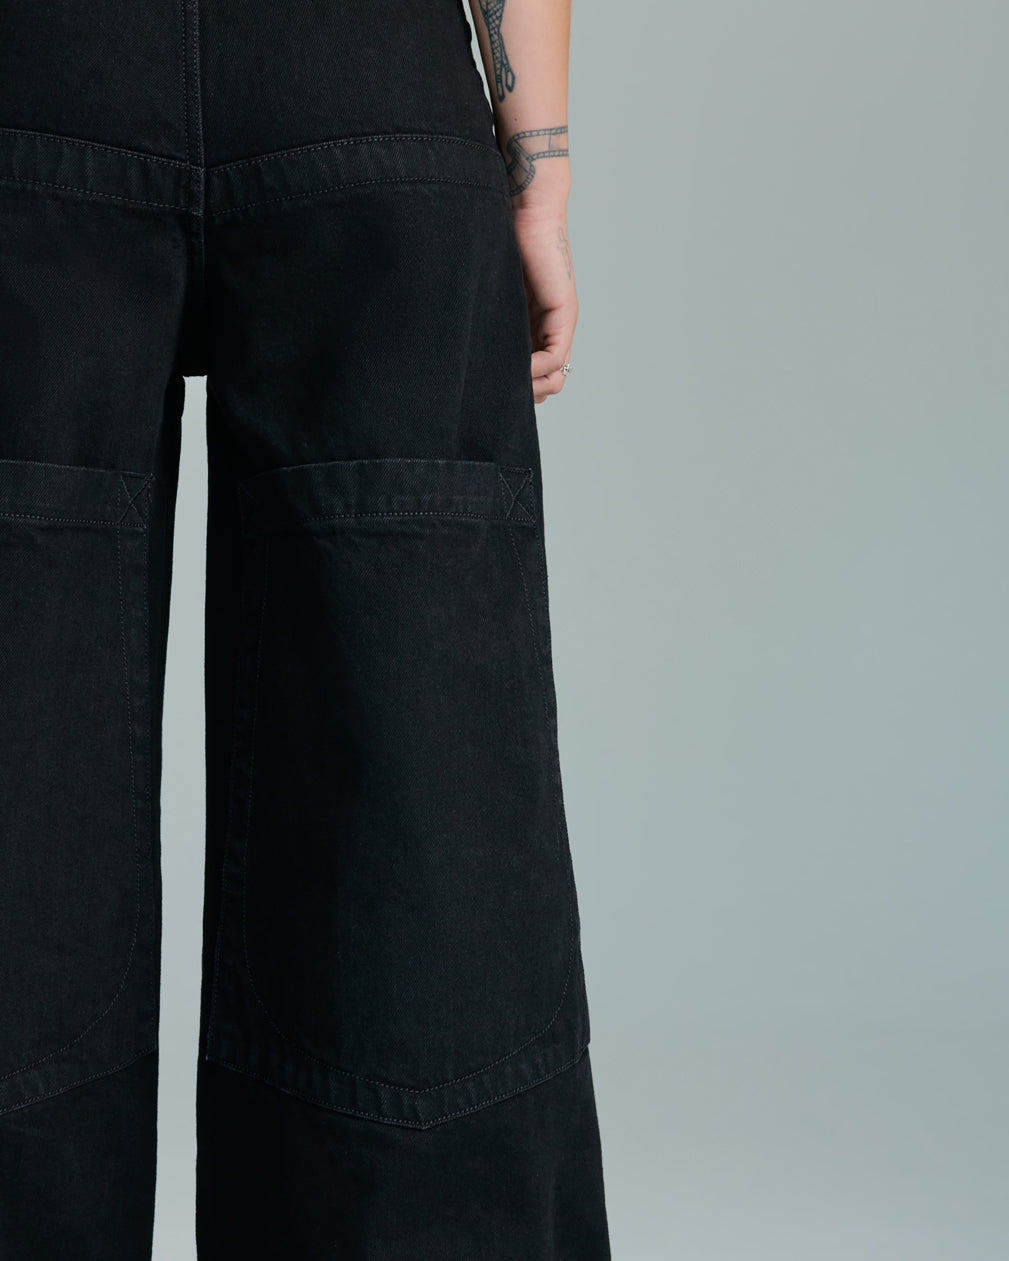 The Camilla Jeans. 27”. Jet Black.